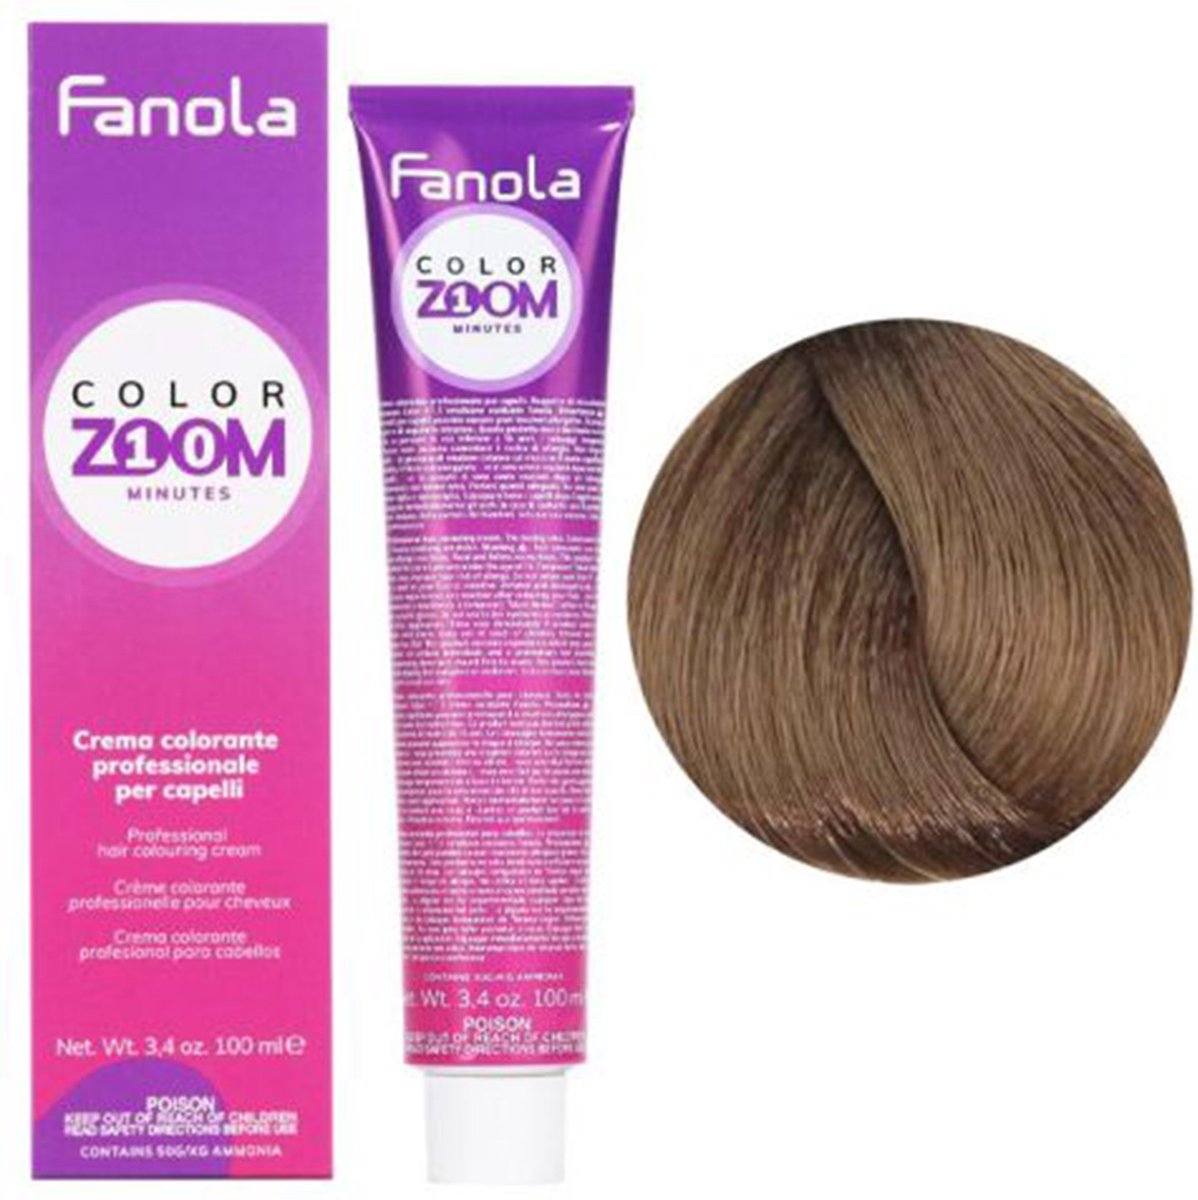 Fanola - Color Zoom - 100 ml - 7.0